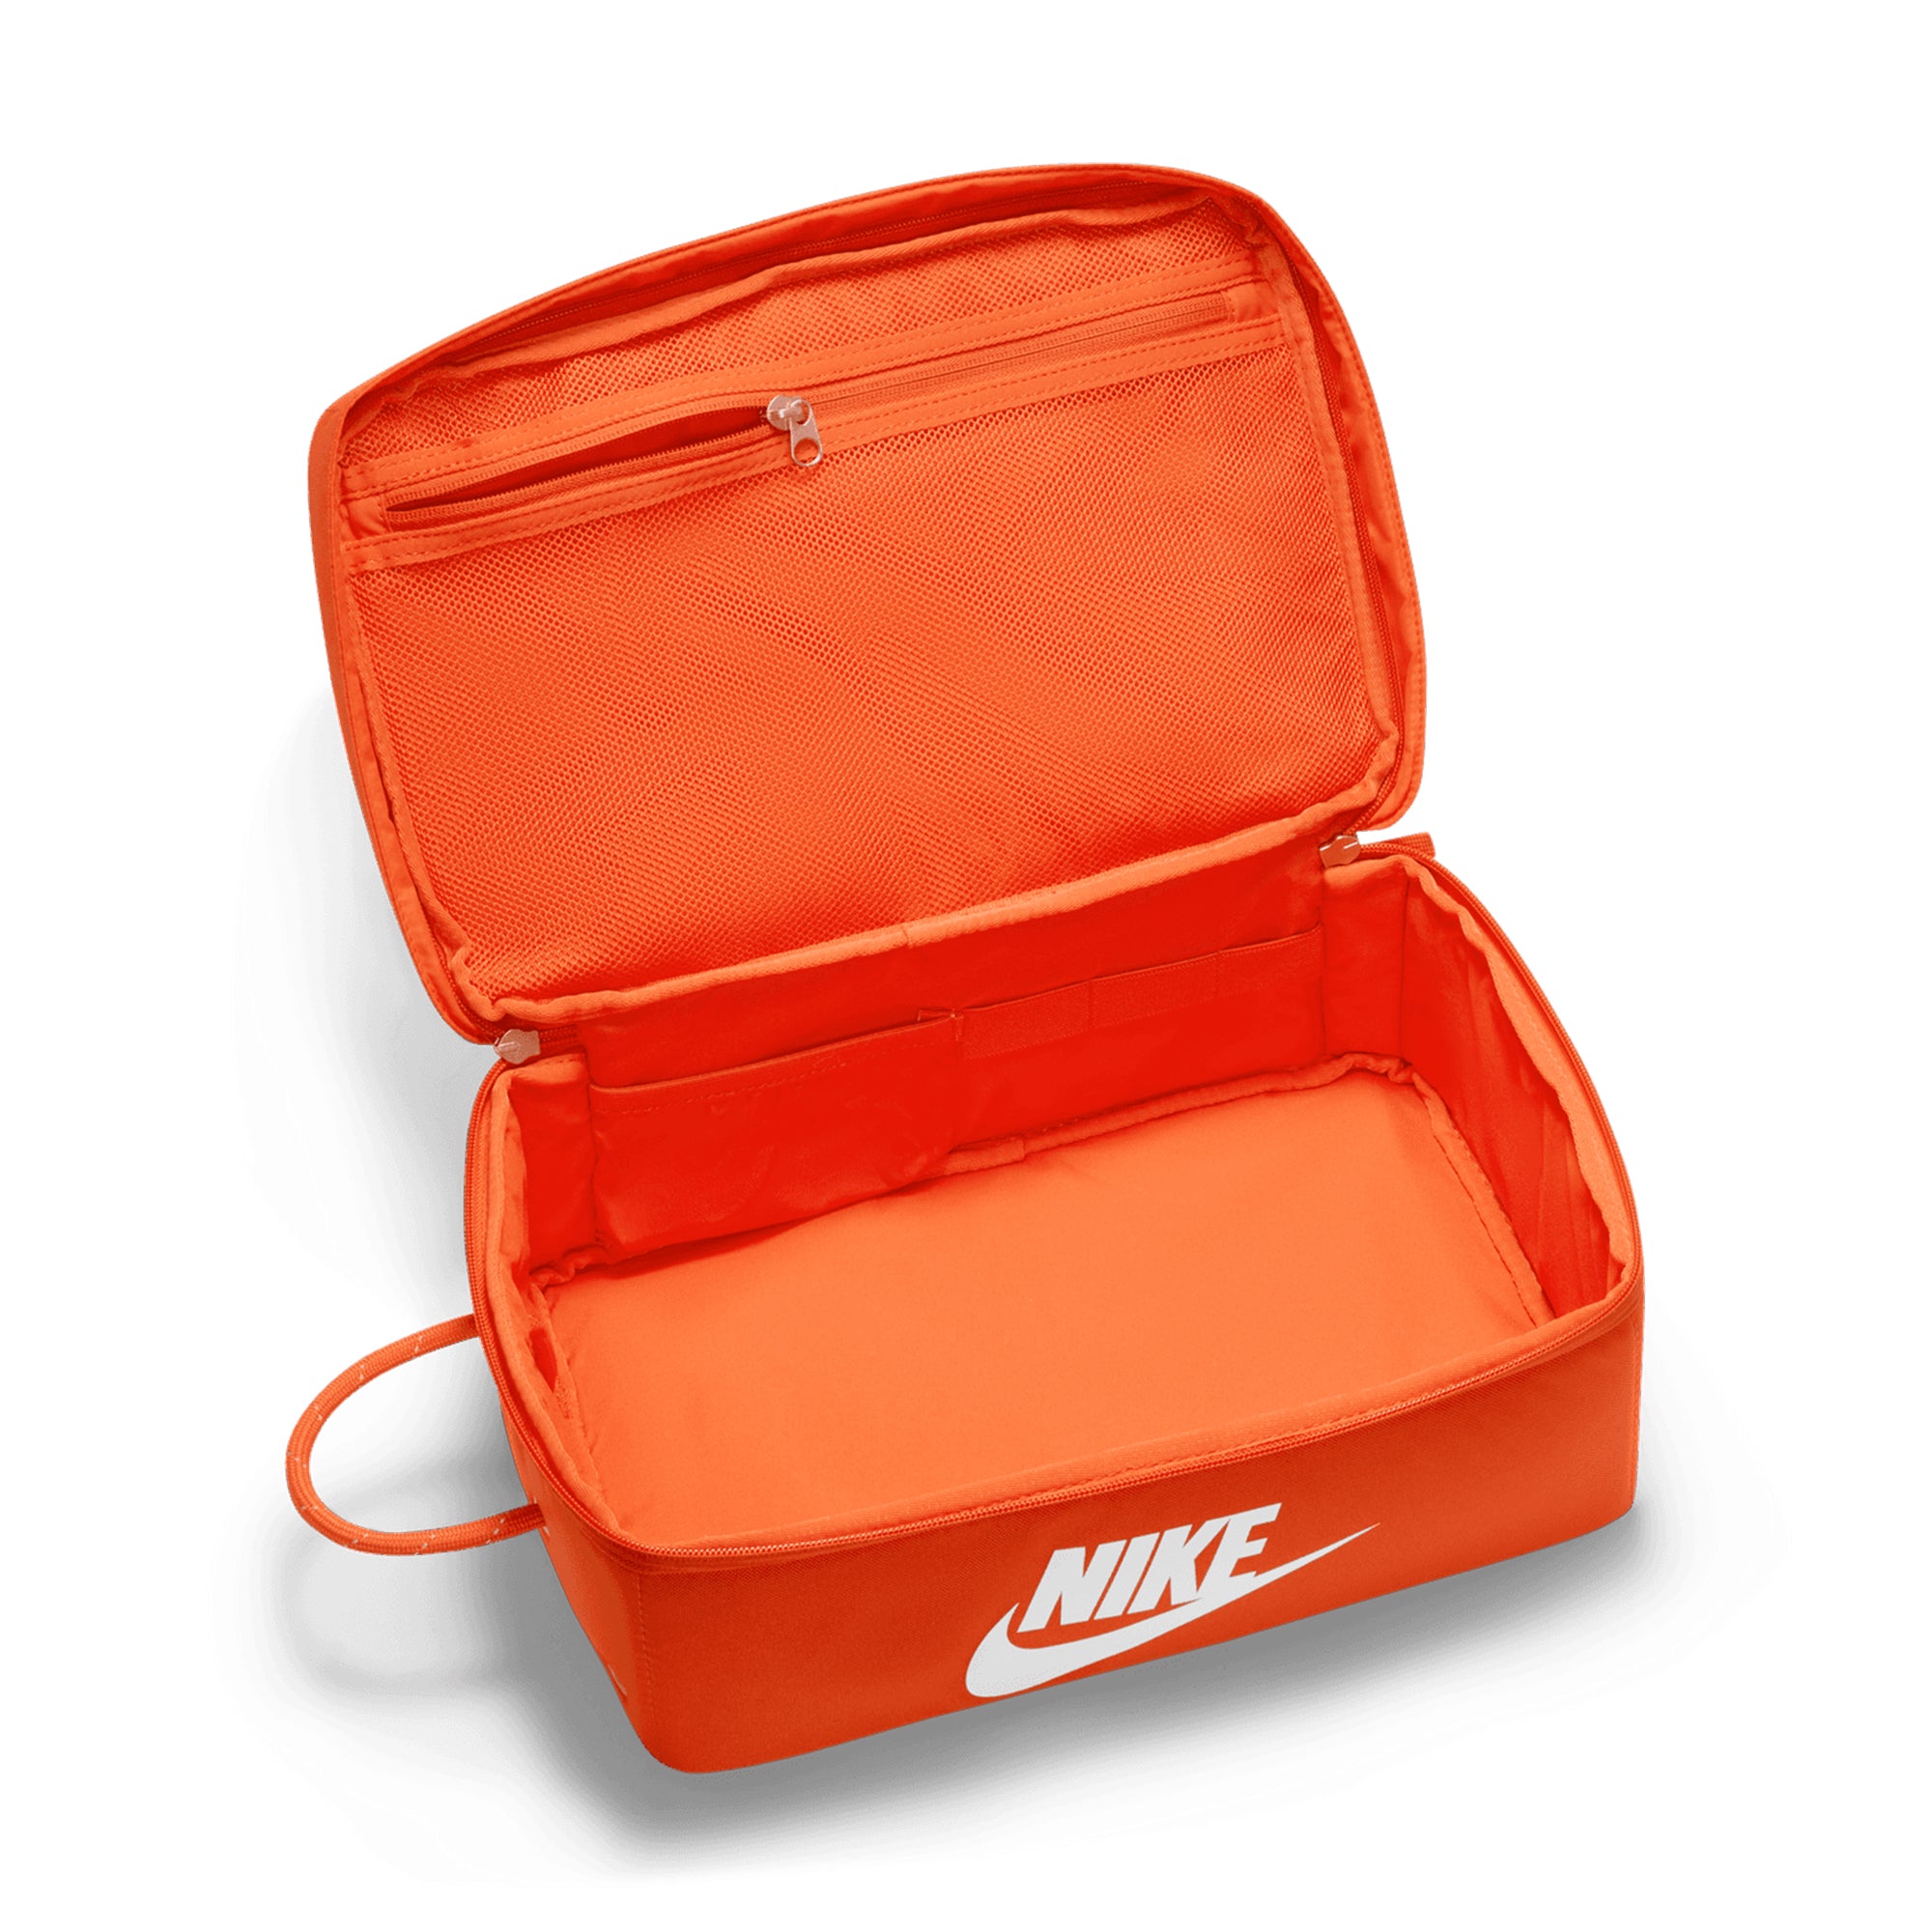 nike-golf-shoebox-bag-da7337-orange-870